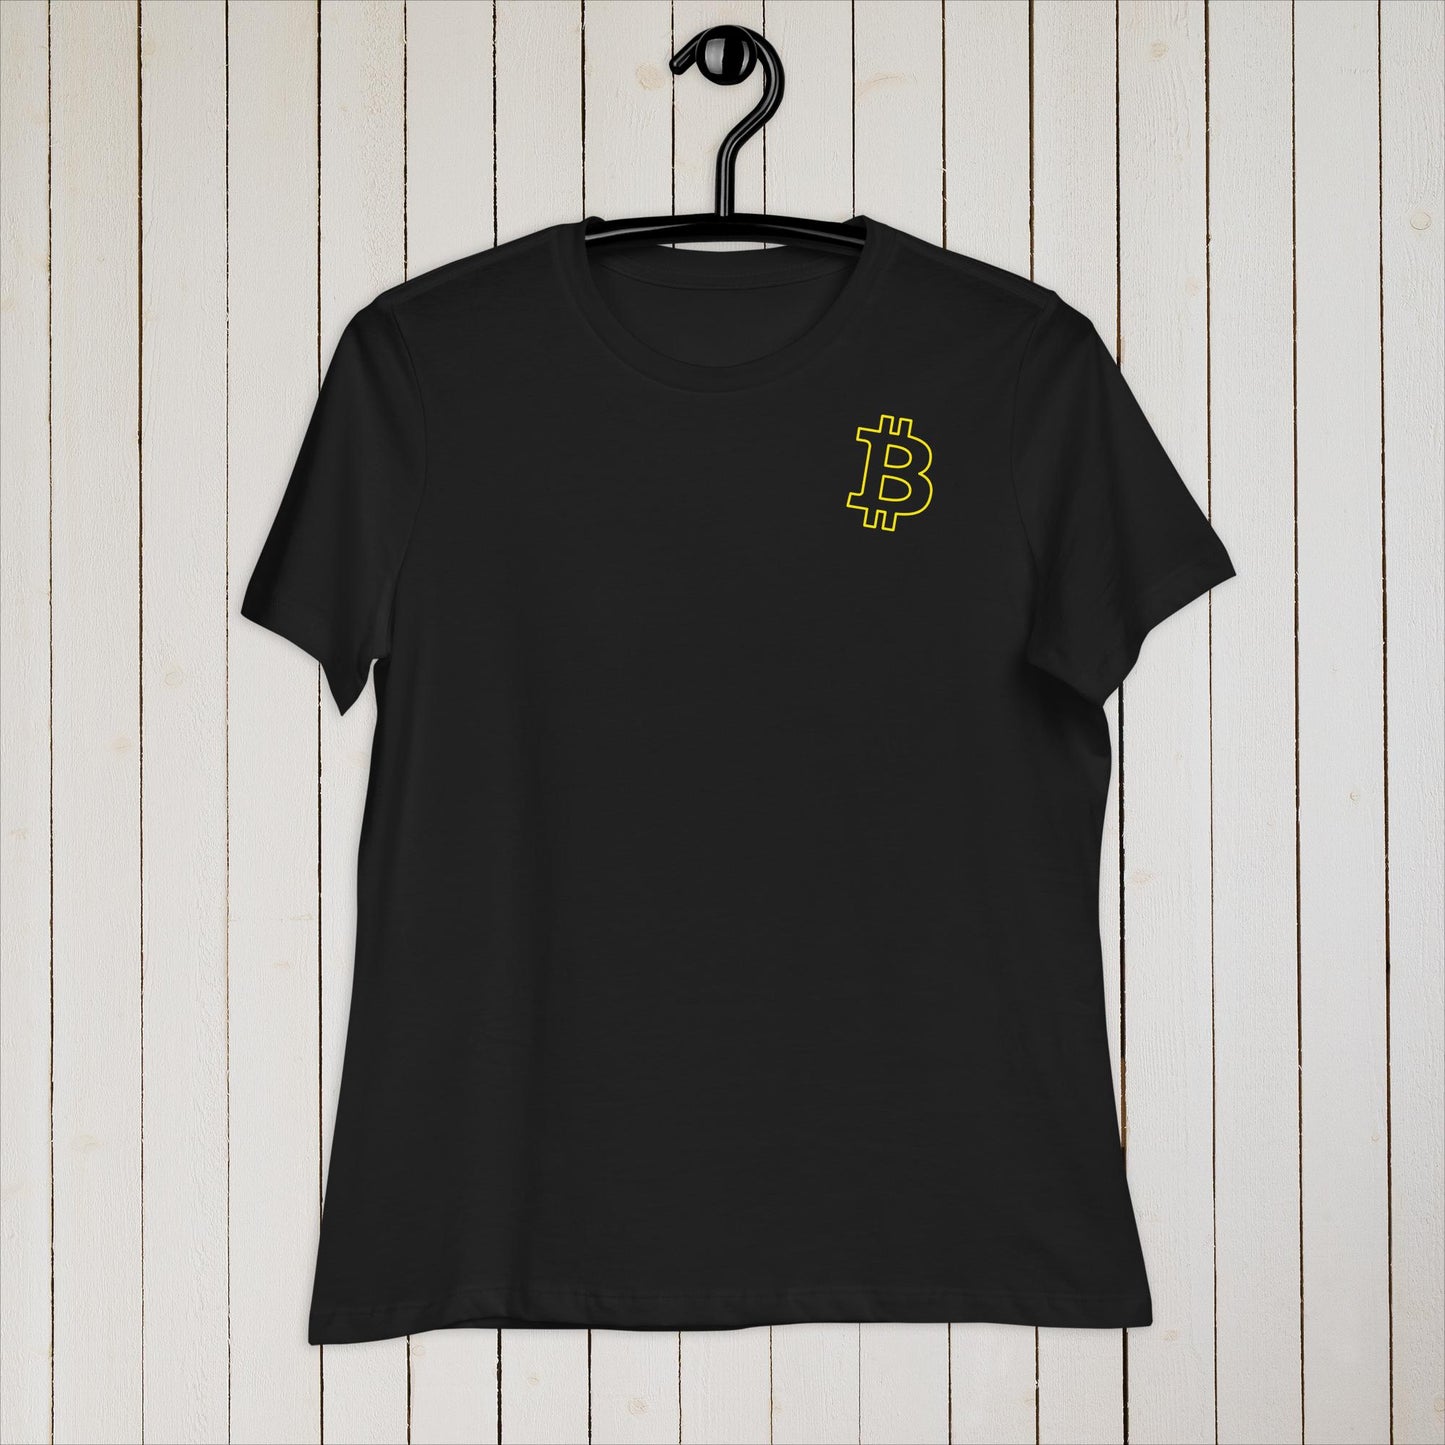 Bitcoin Yellow Women's T-Shirt